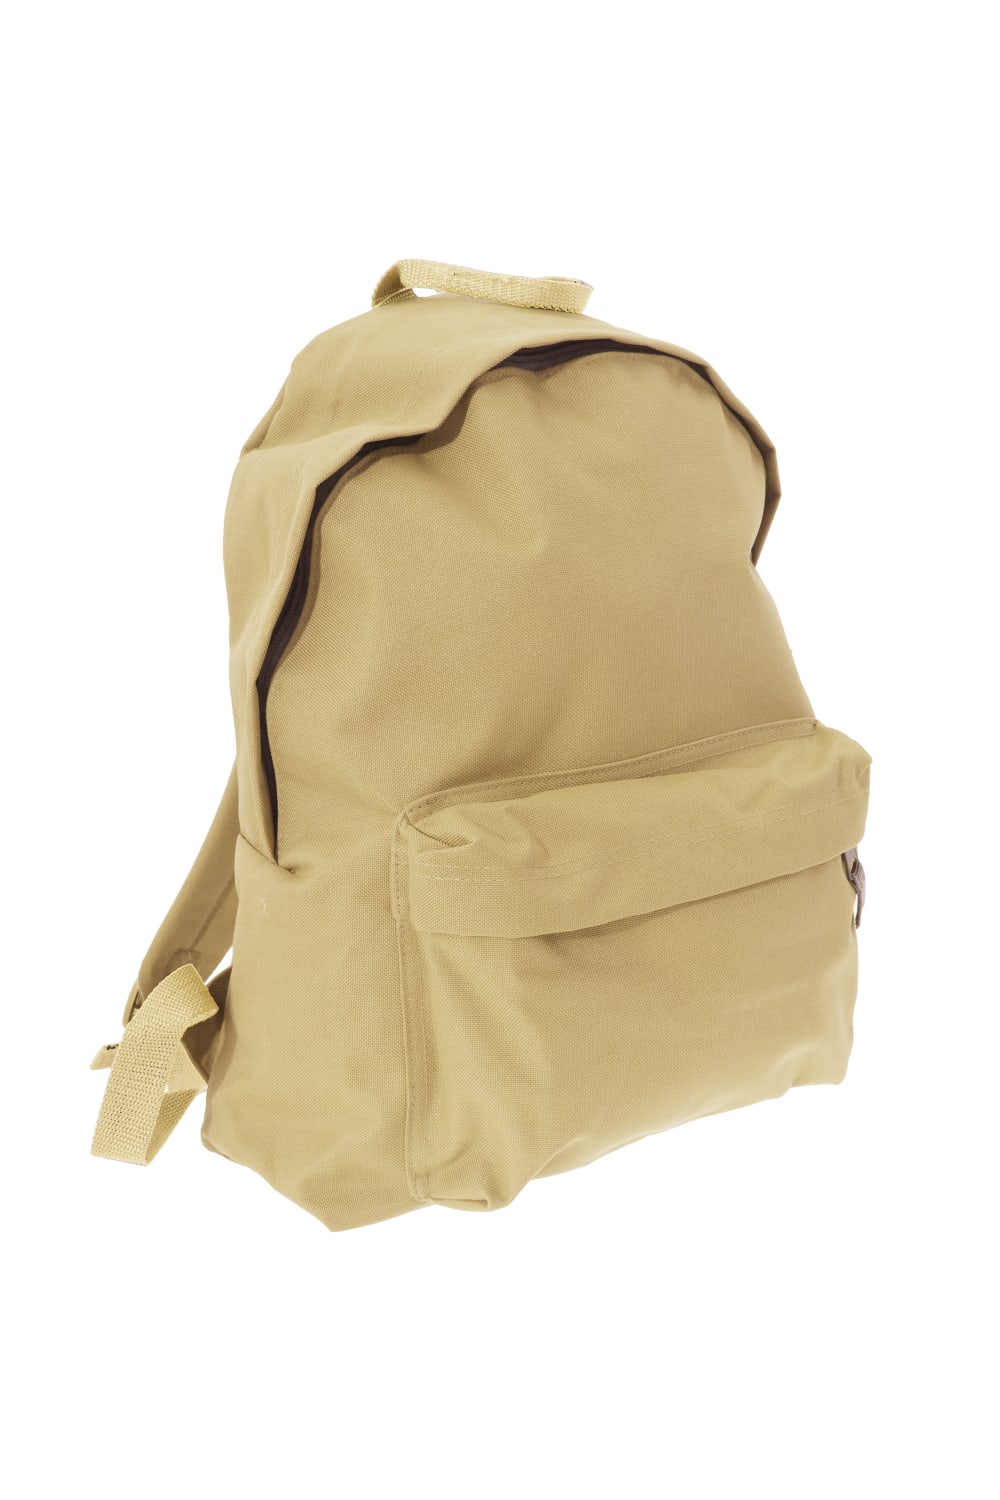 Fashion Backpack/Rucksack,18 Liters Pack Of 2 - Caramel